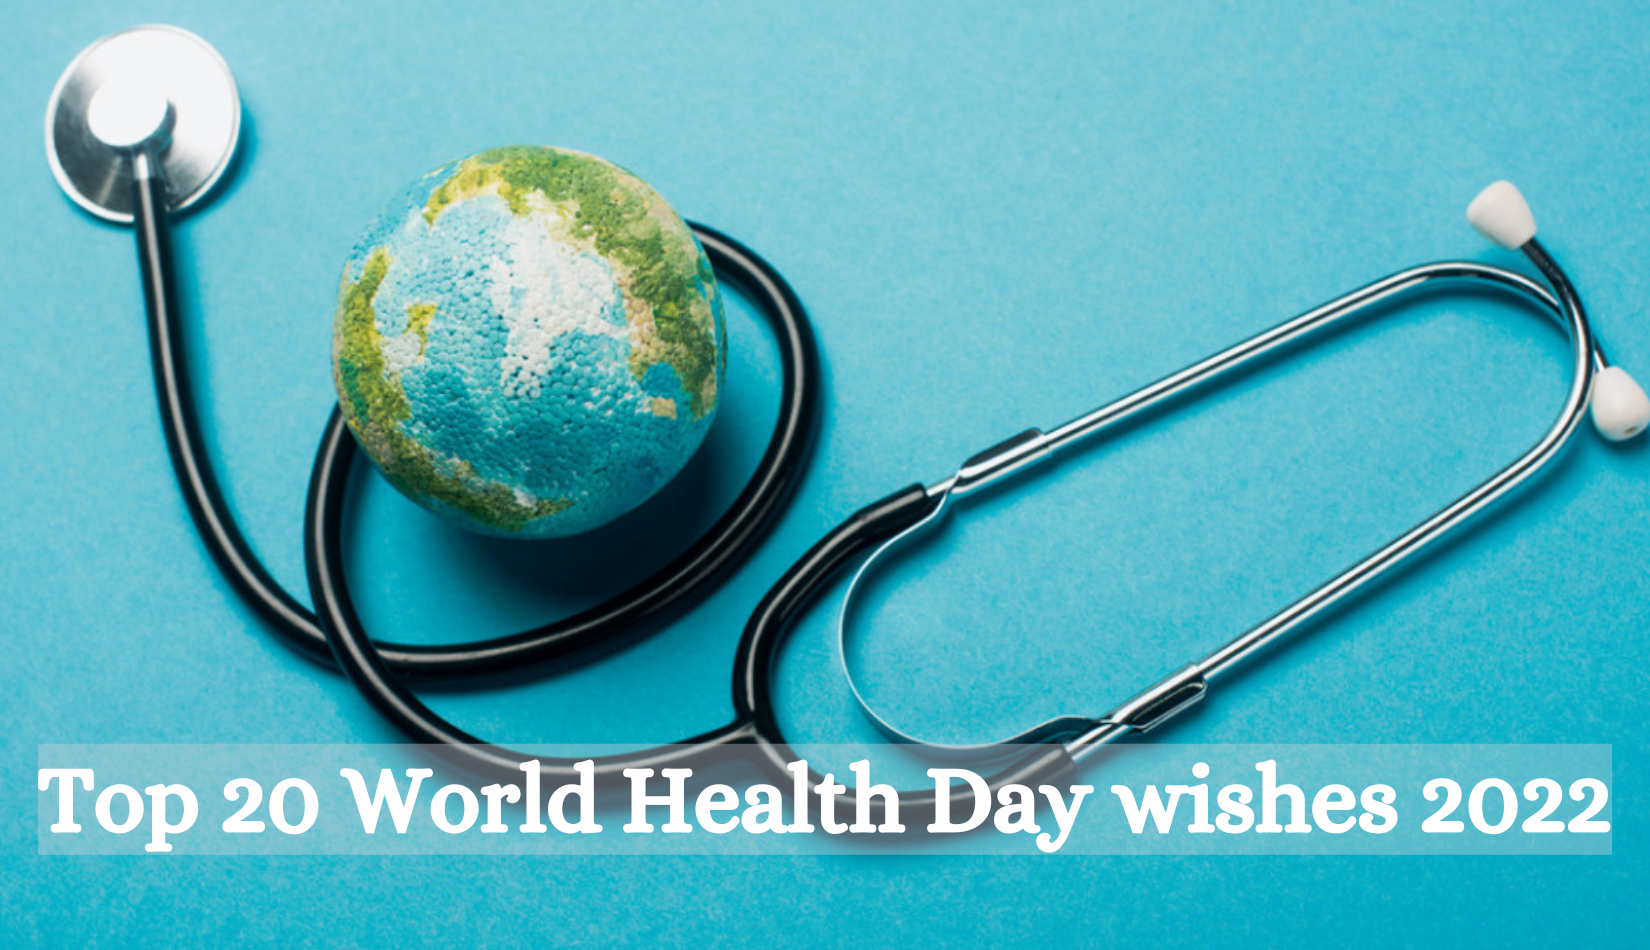 World Health Day wishes